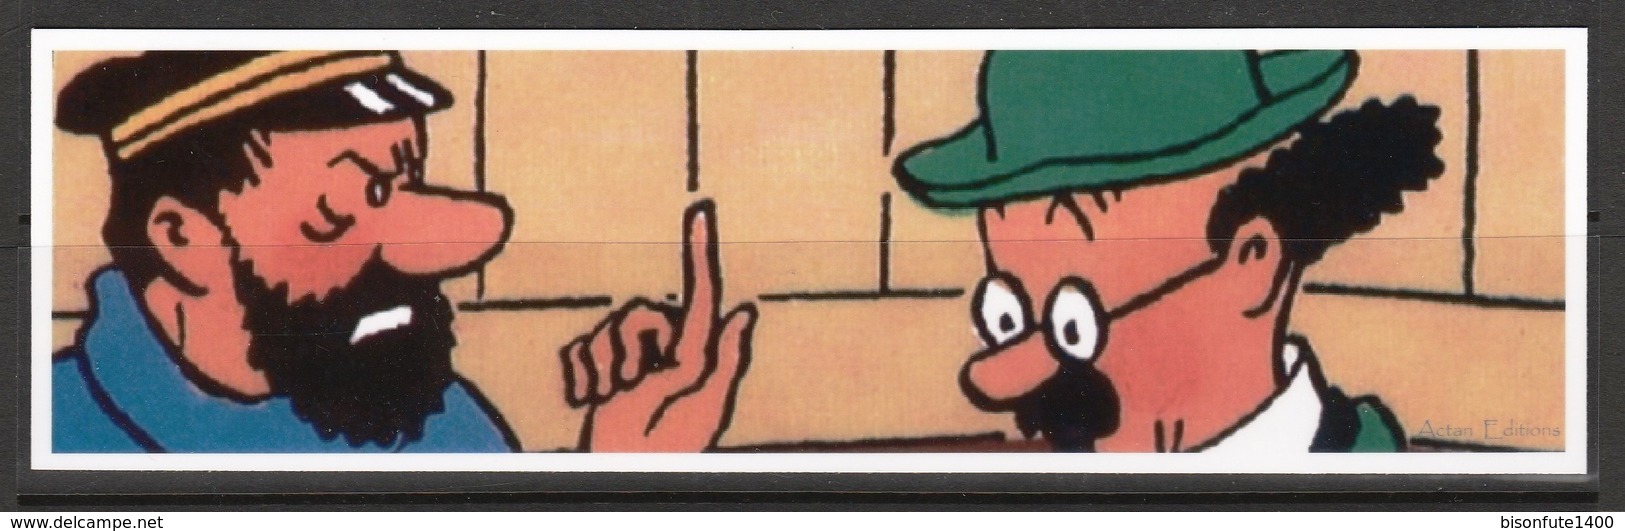 Tintin - 1 Marque Page Avec Illustration Tintin - Editions Actan. ( Dimensions : 5,2 Cm X 18,7 Cm ) - Marque-pages